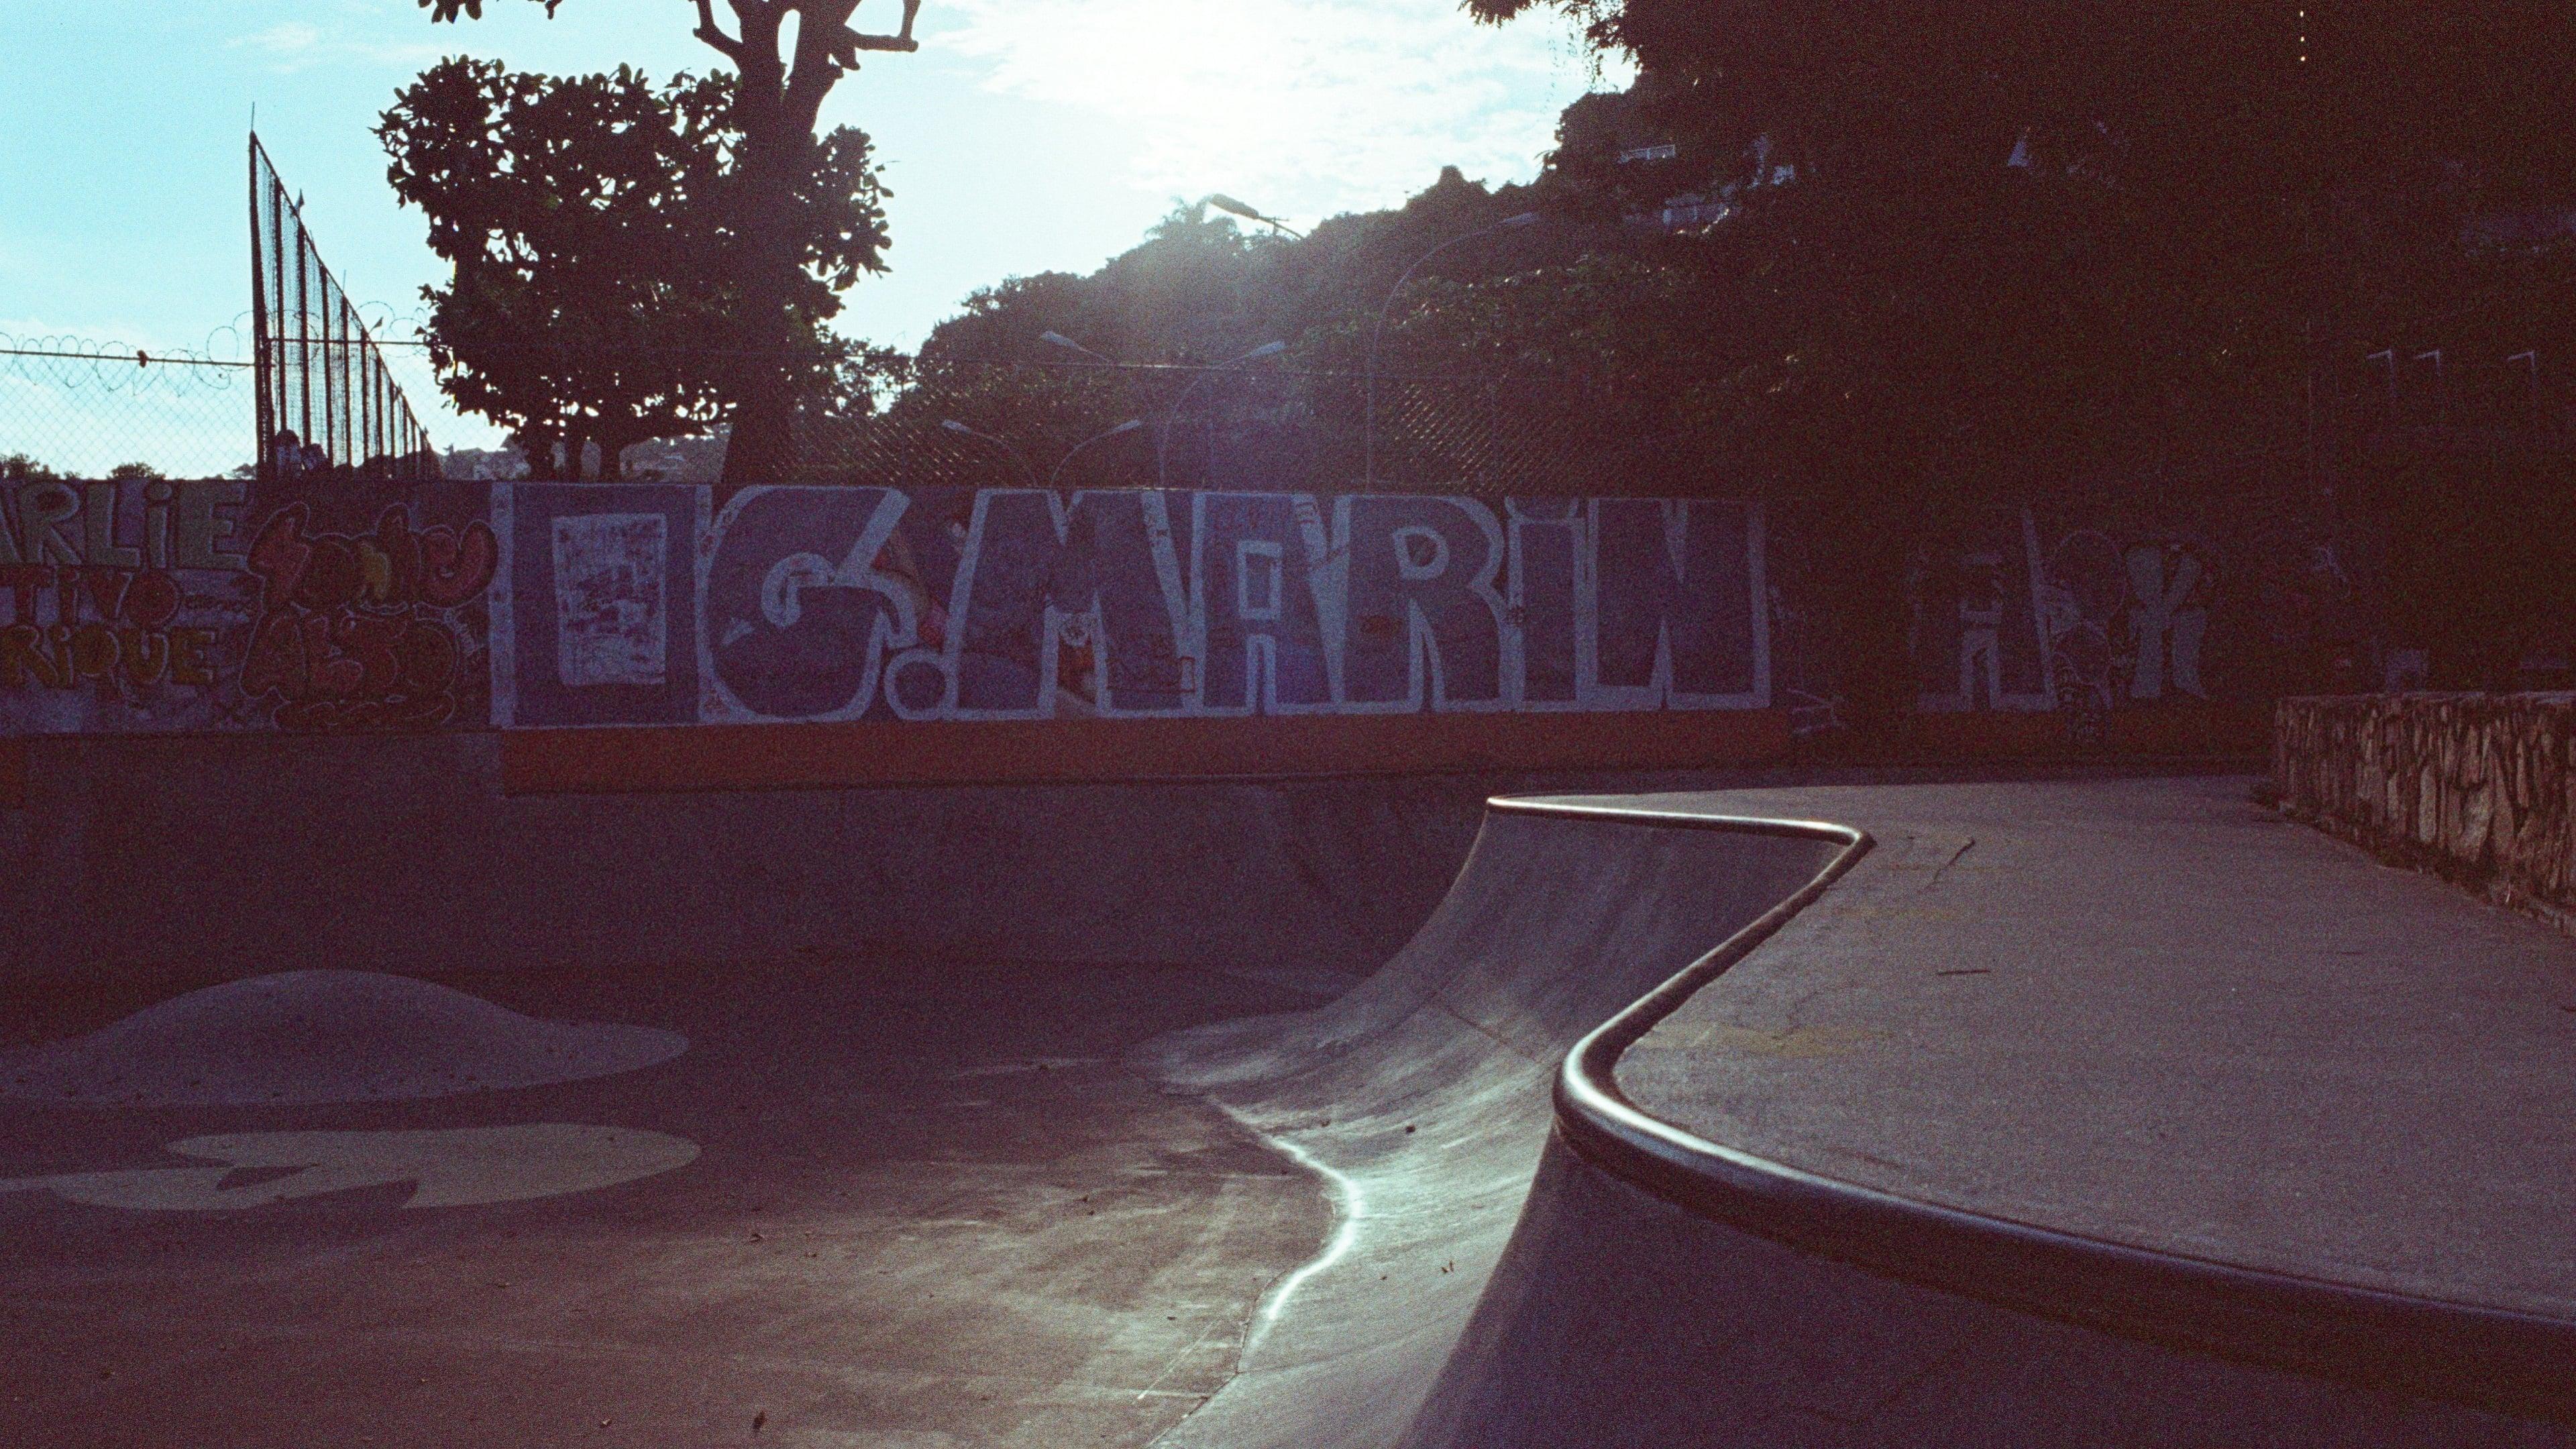 Marina Skatepark backdrop